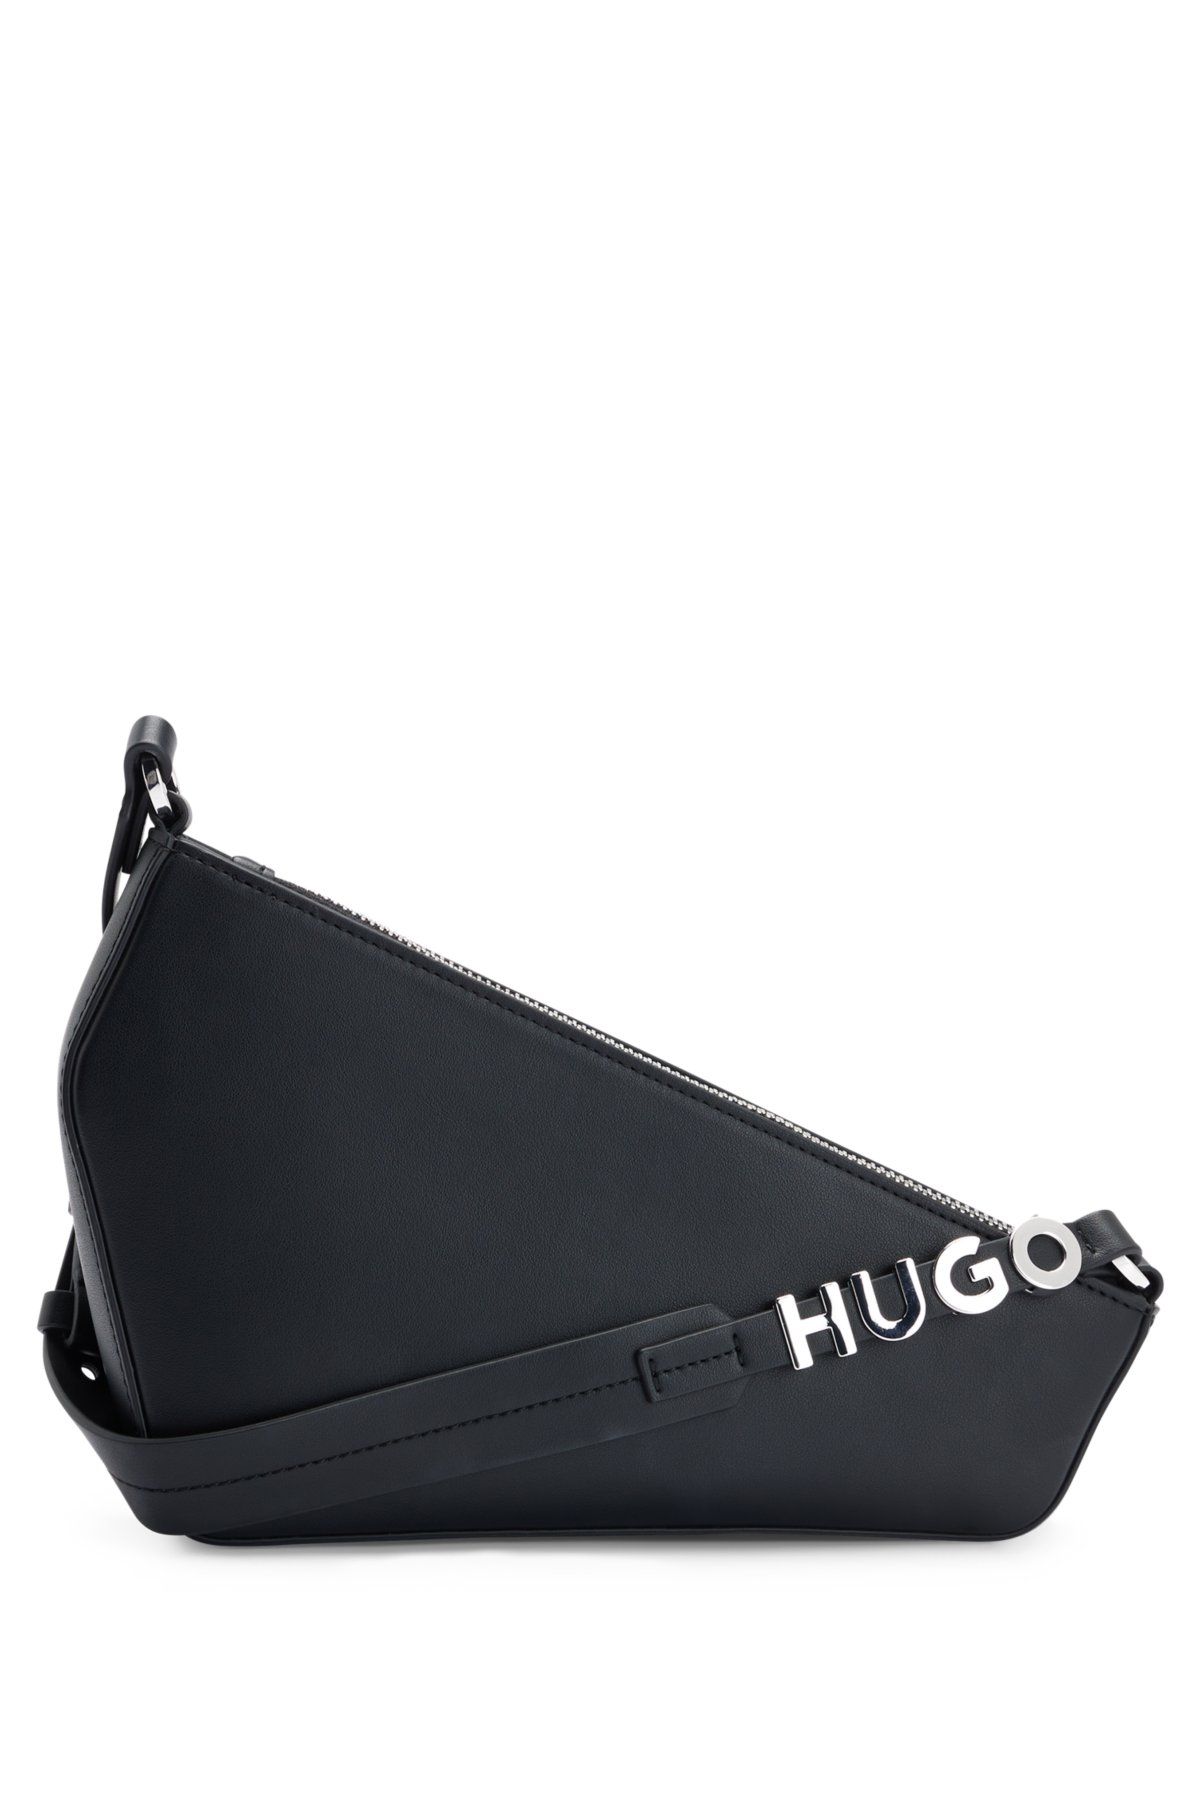 faux Asymmetric bag - with logo in HUGO metallic shoulder leather